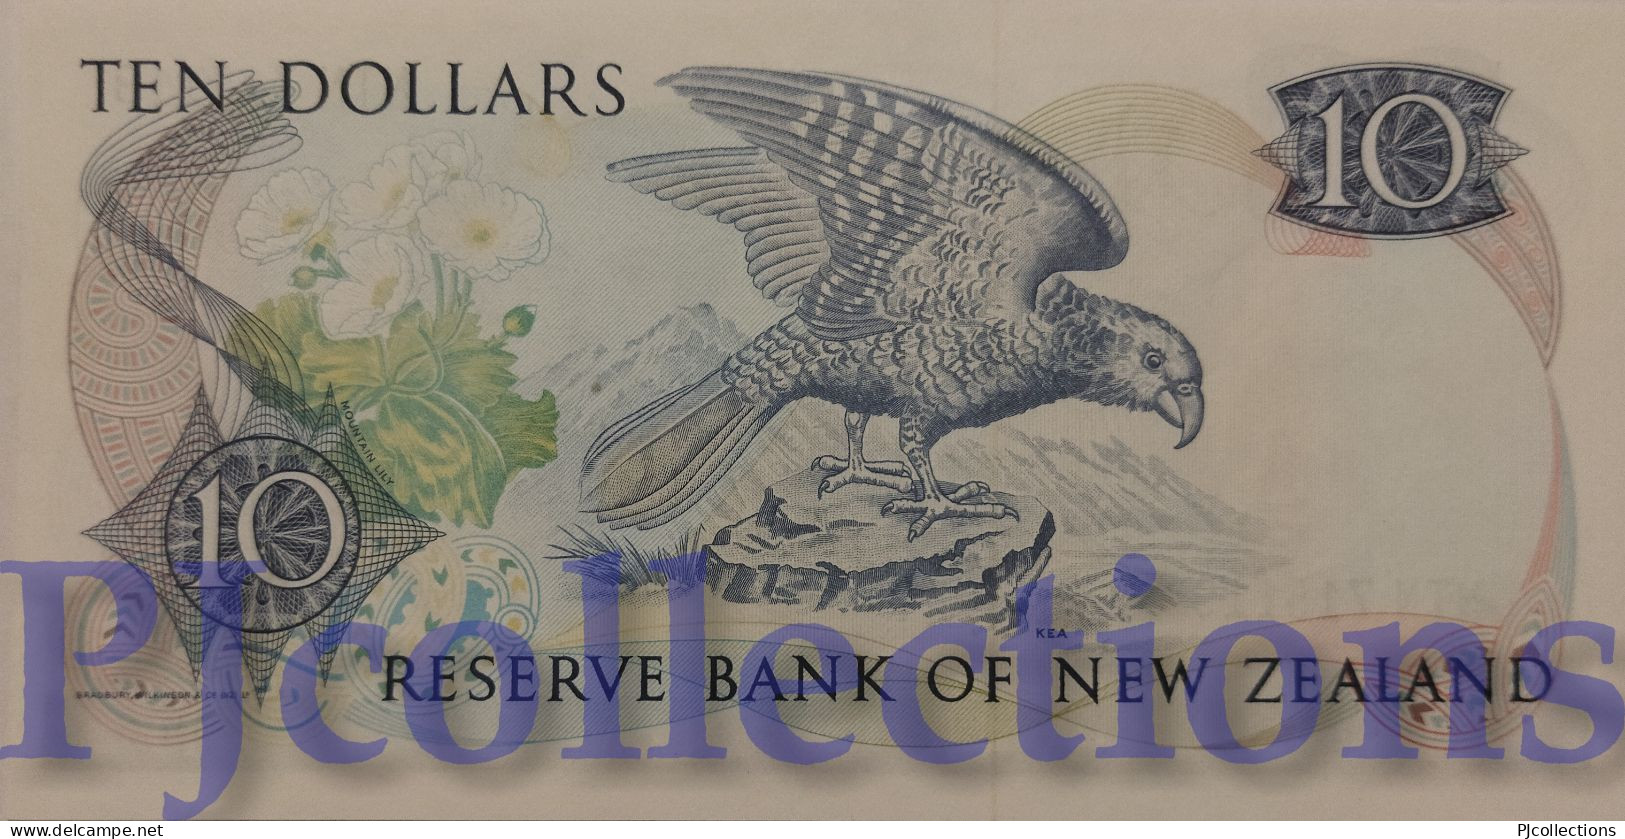 NEW ZEALAND 10 DOLLARS 1985/89 PICK 172b UNC - Neuseeland